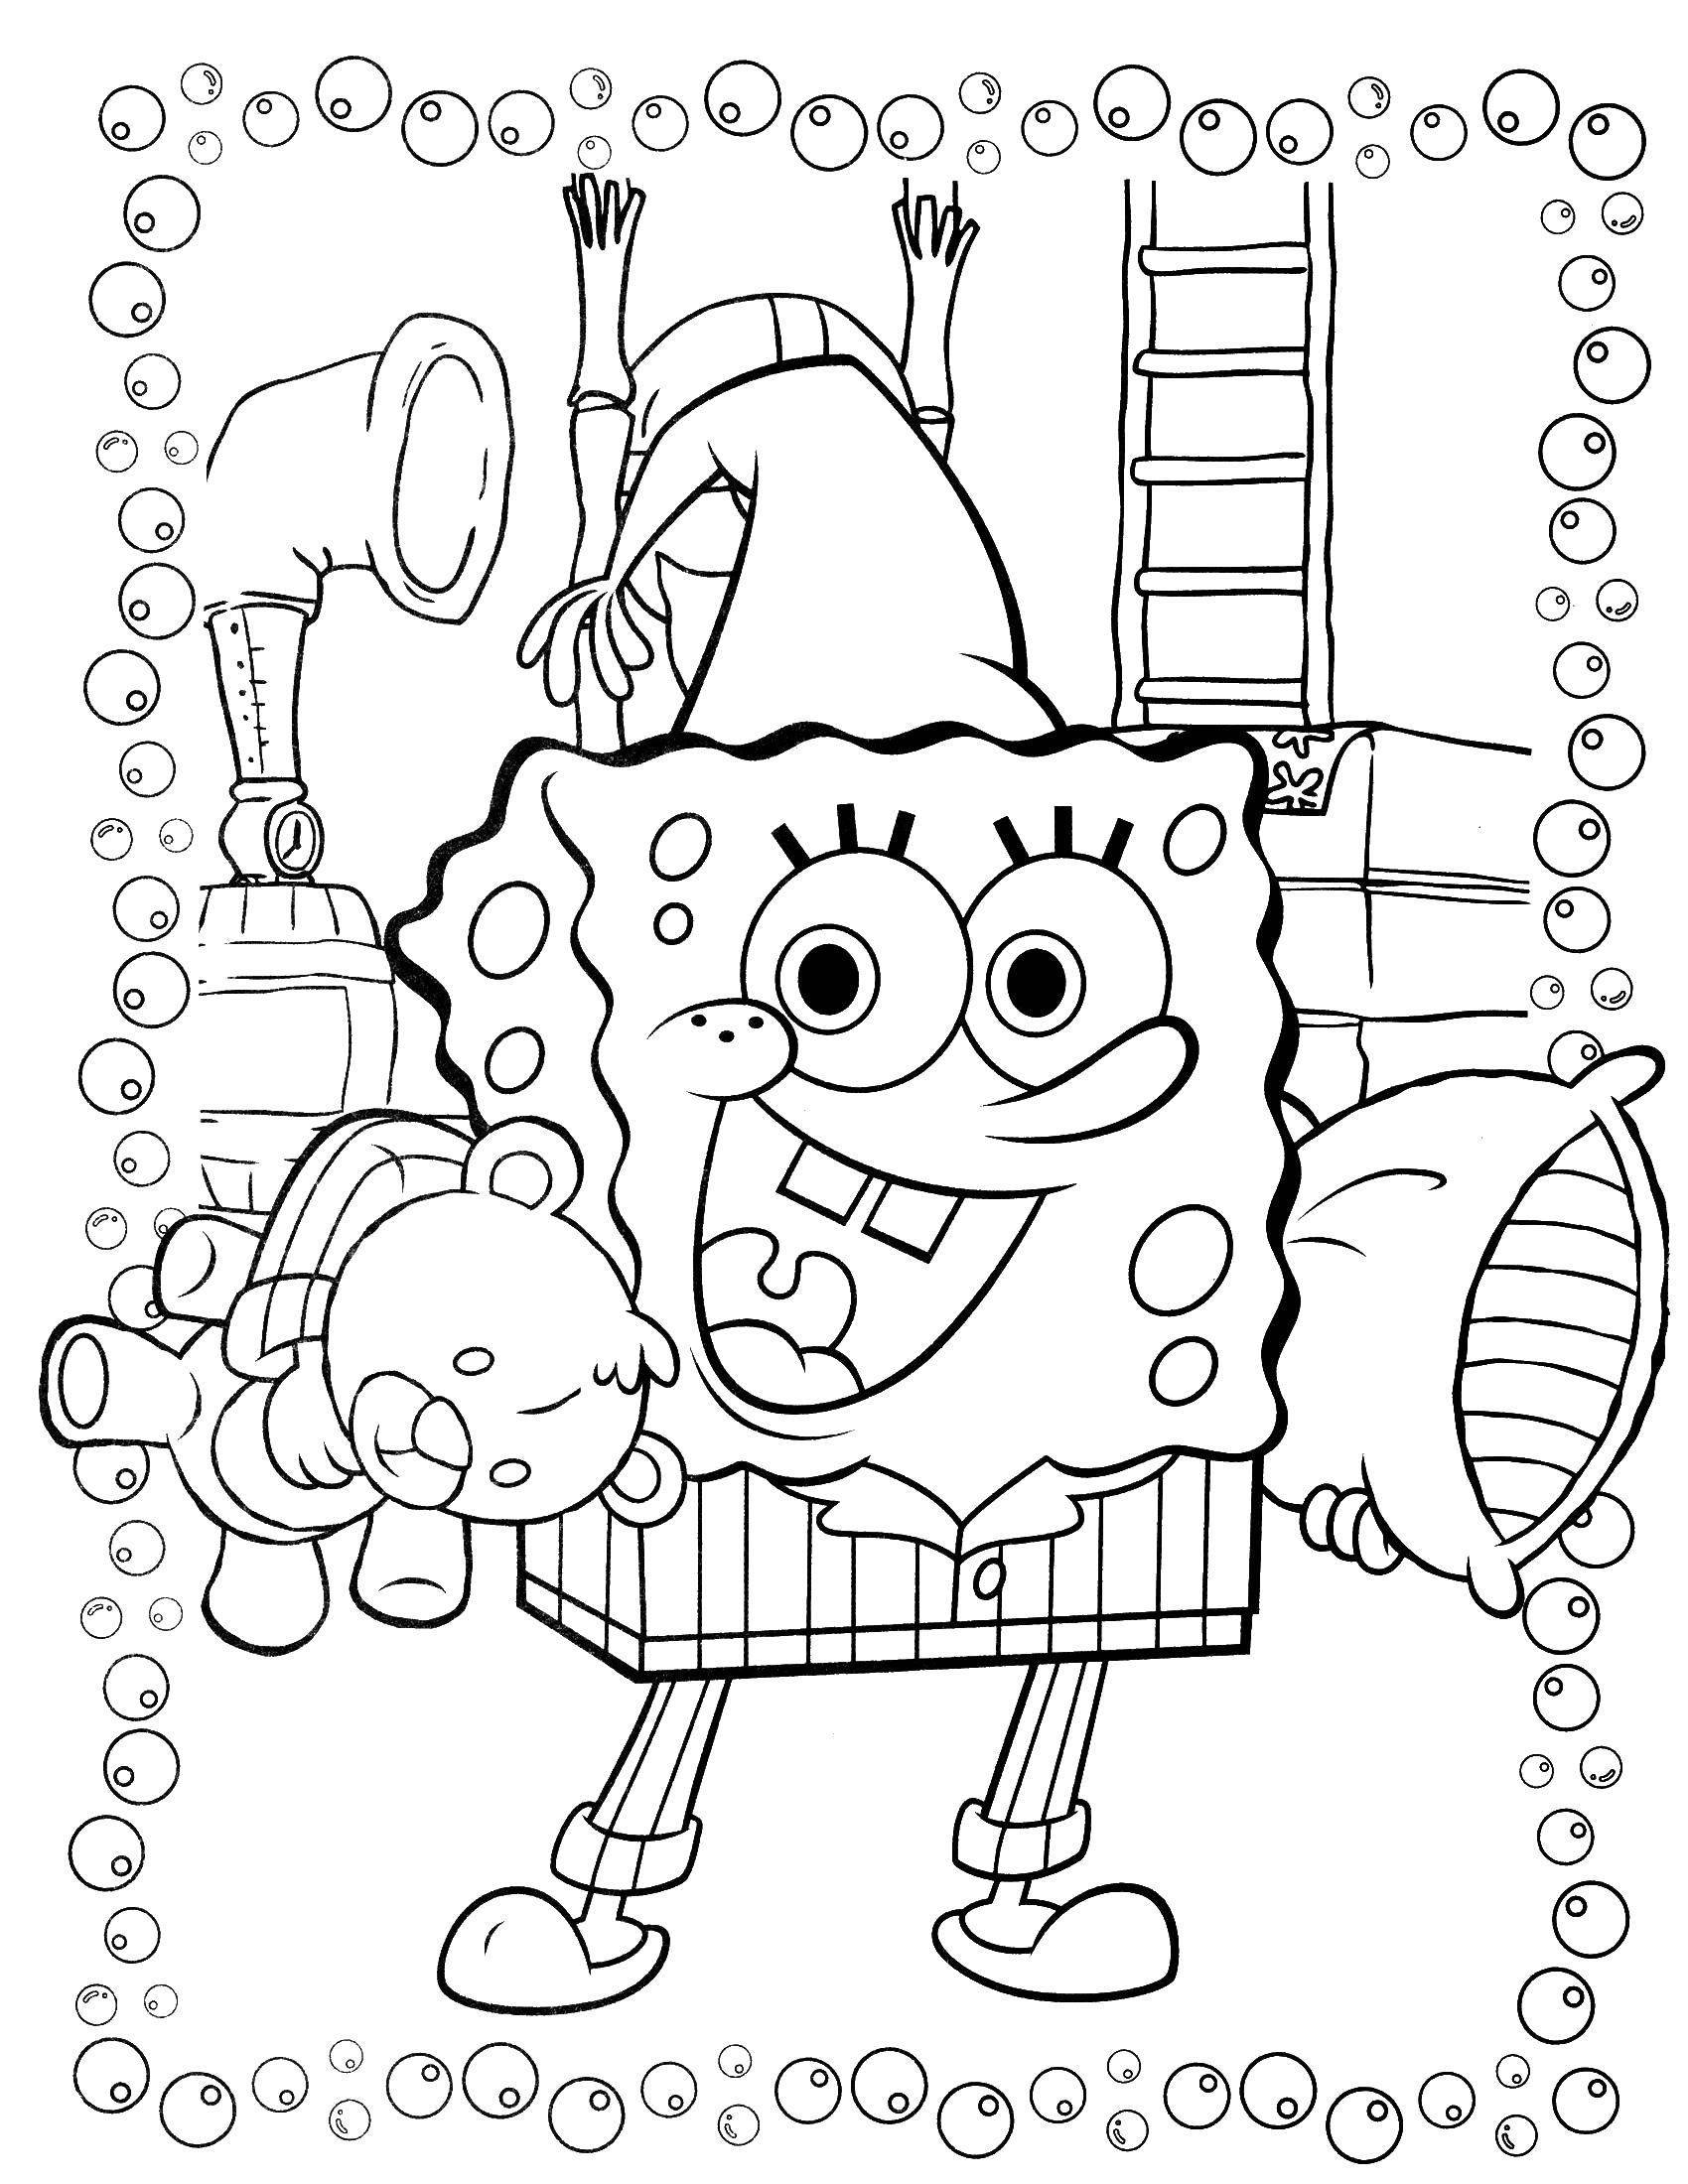 Coloring Spongebob goes to sleep. Category Spongebob. Tags:  spongebob, Patrick.